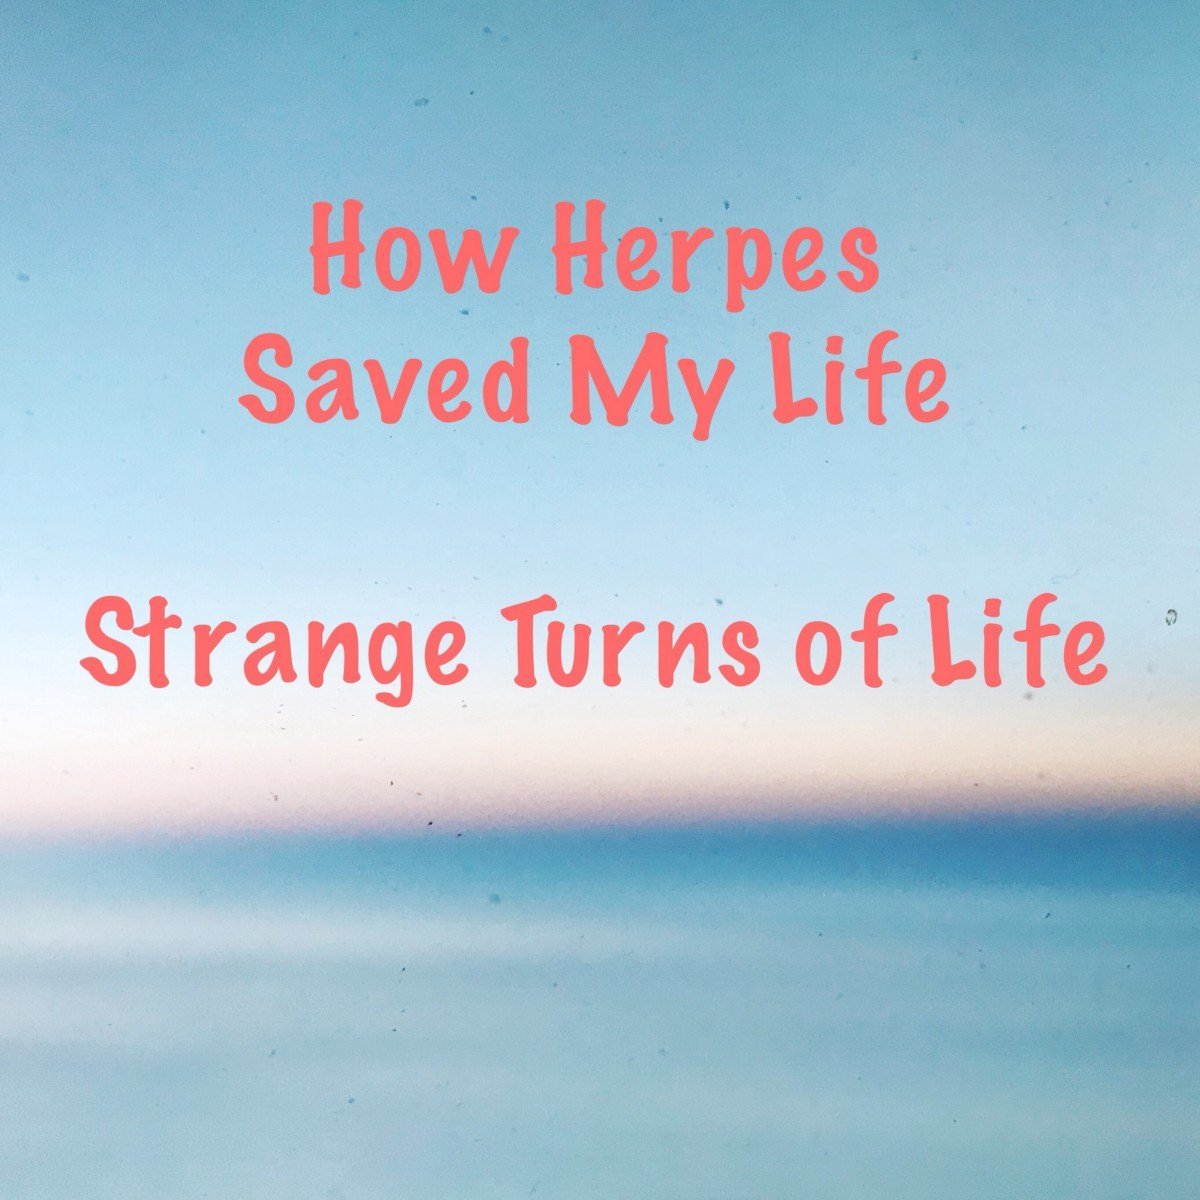 Herpes salvó mi vida, de verdad.